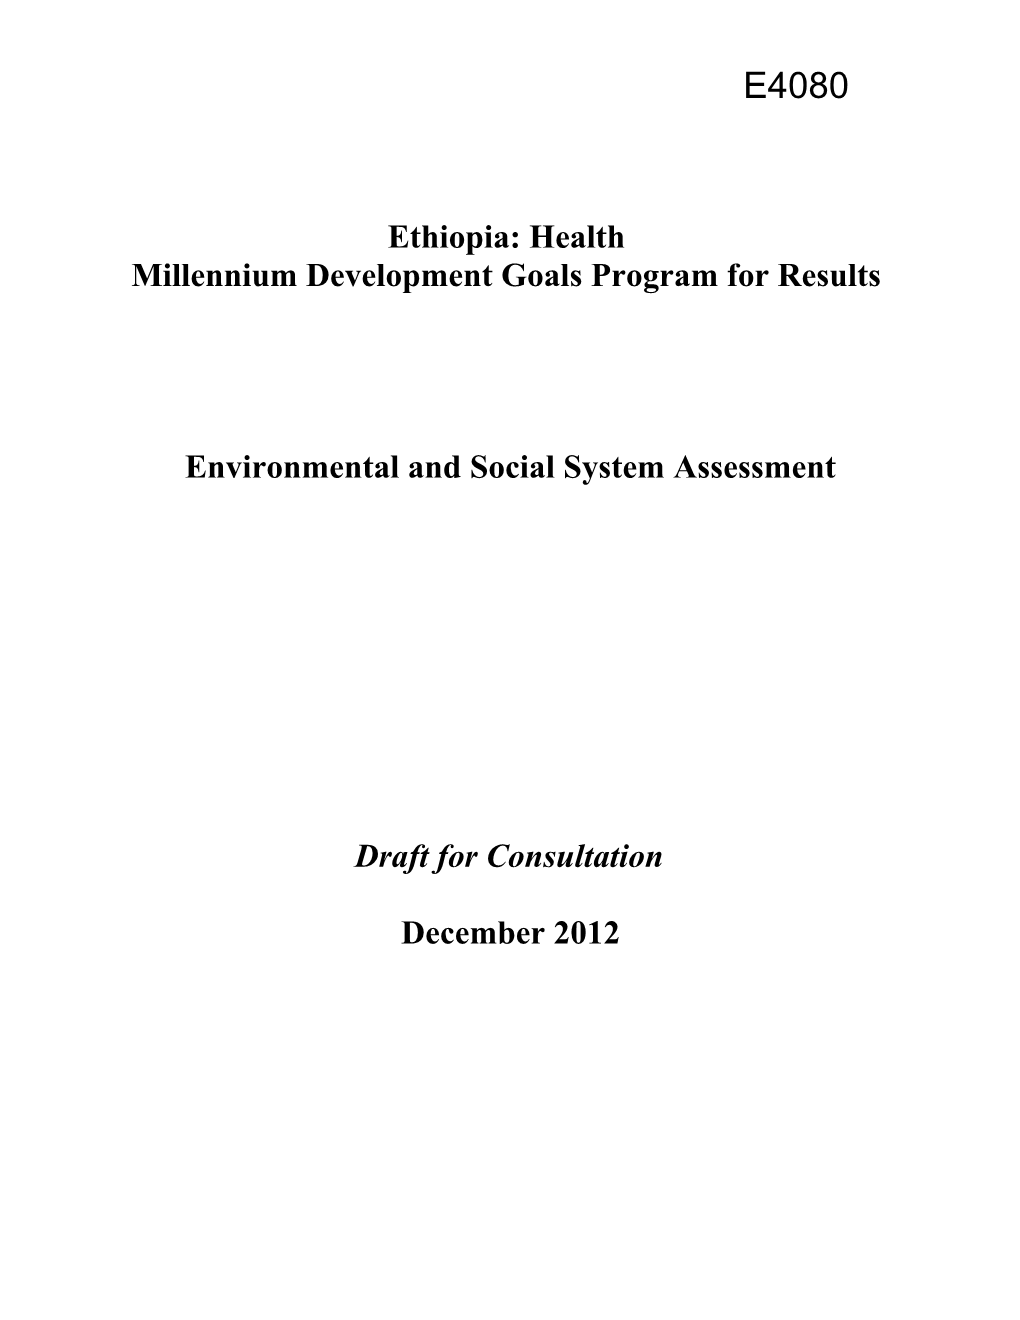 Millennium Development Goals Program for Results